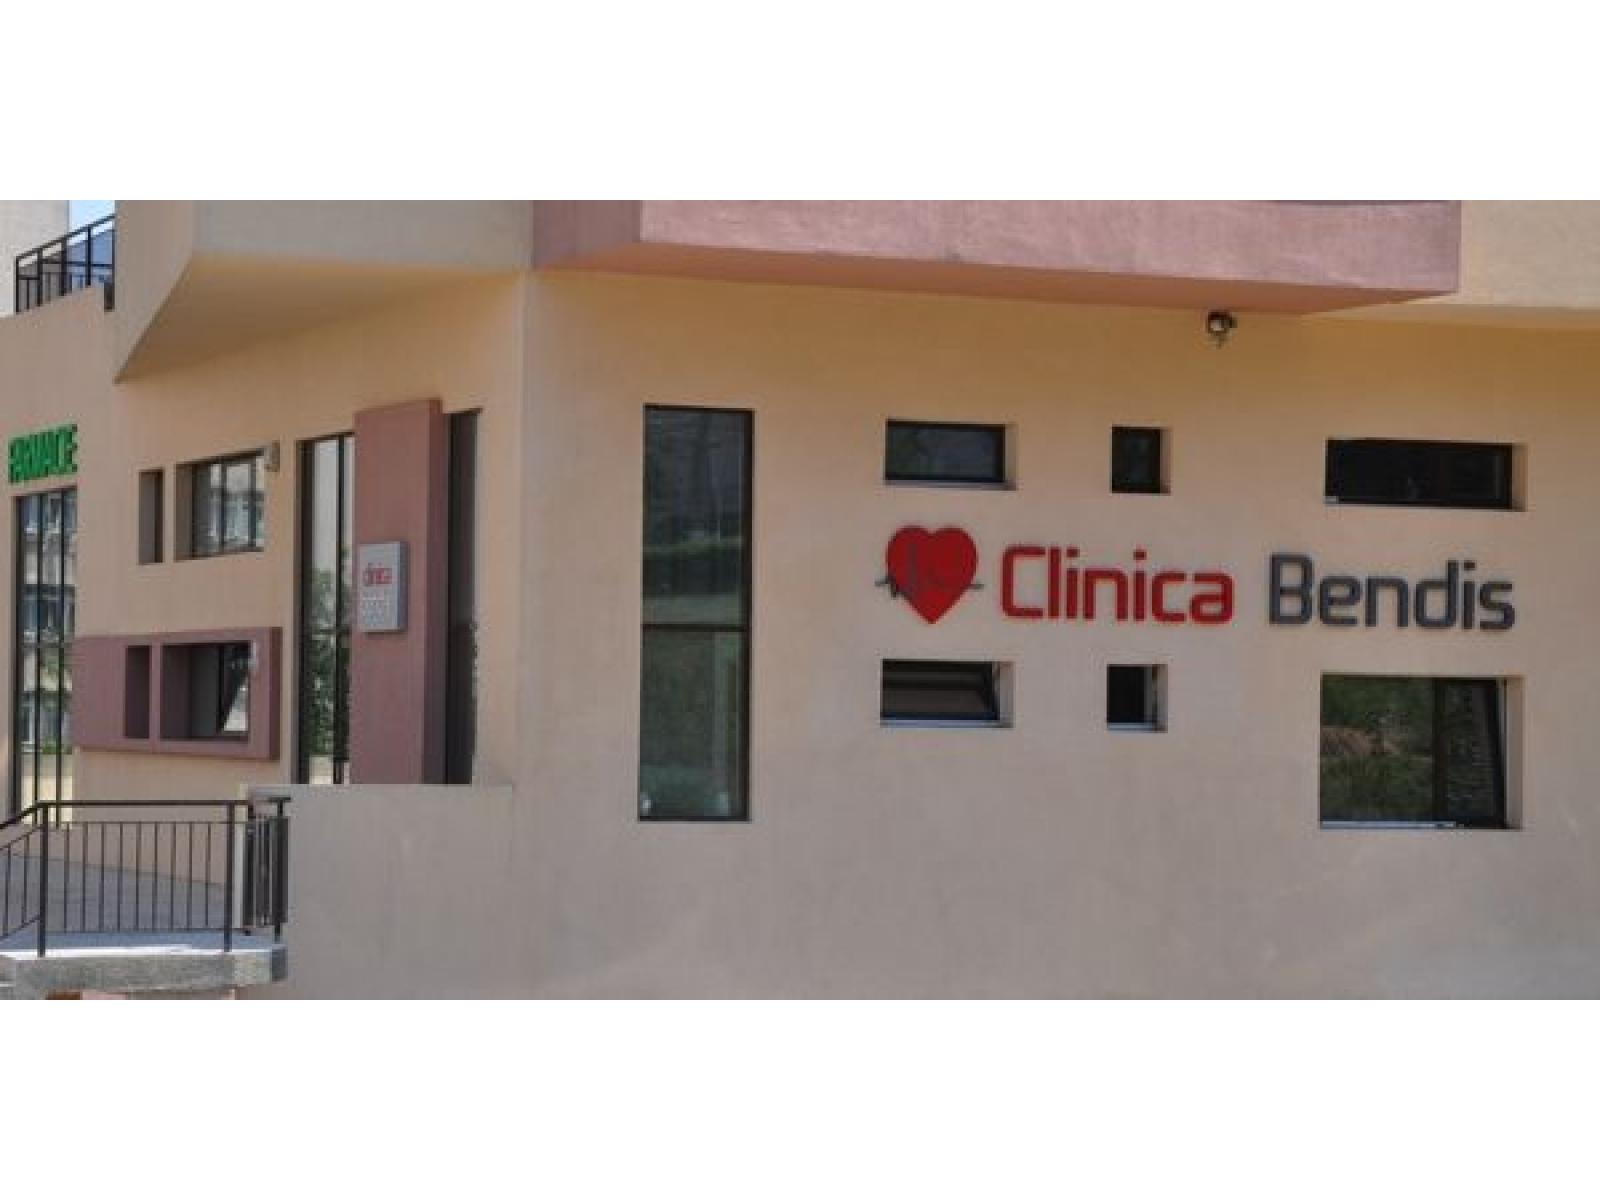 Clinica Bendis - Clinica+Farma.jpg